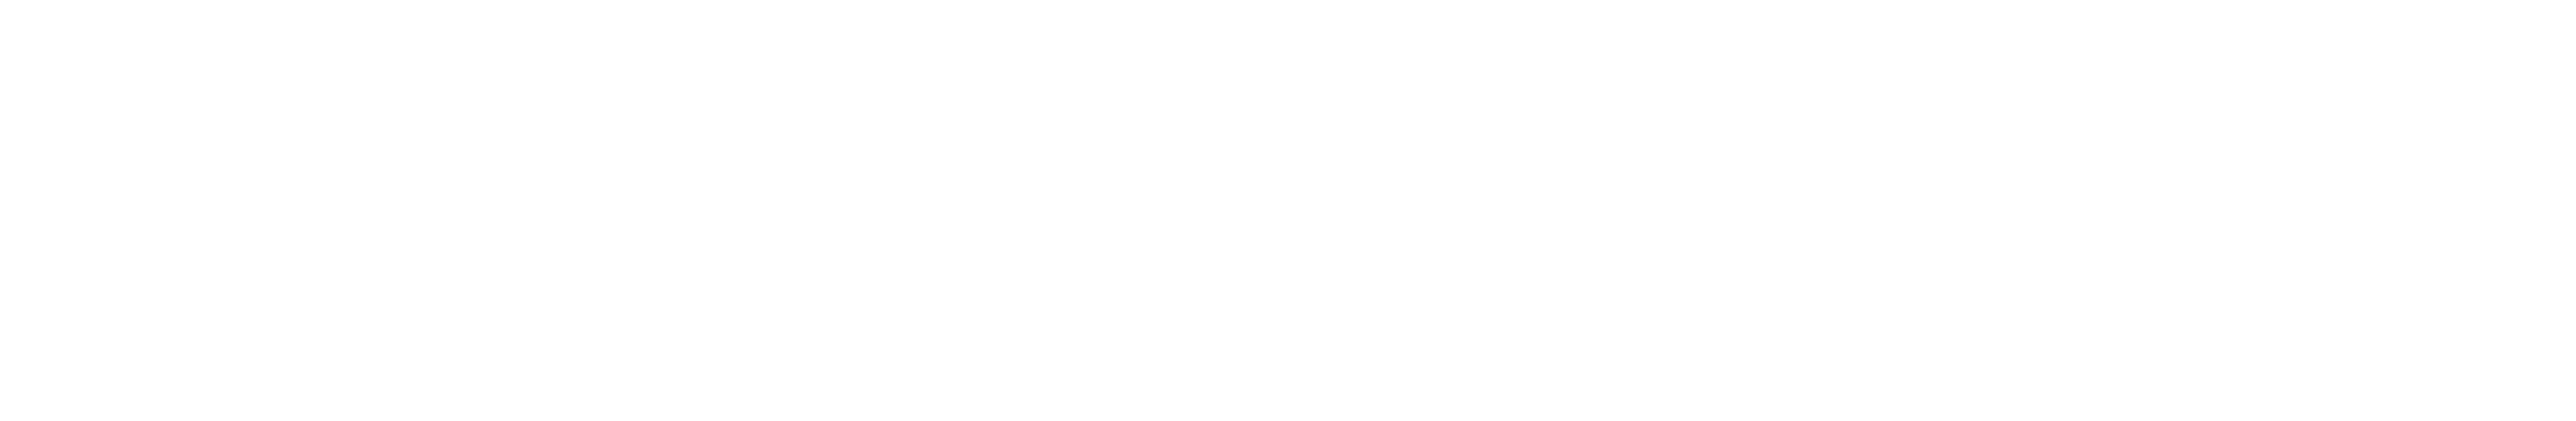 Cave Rescue logo